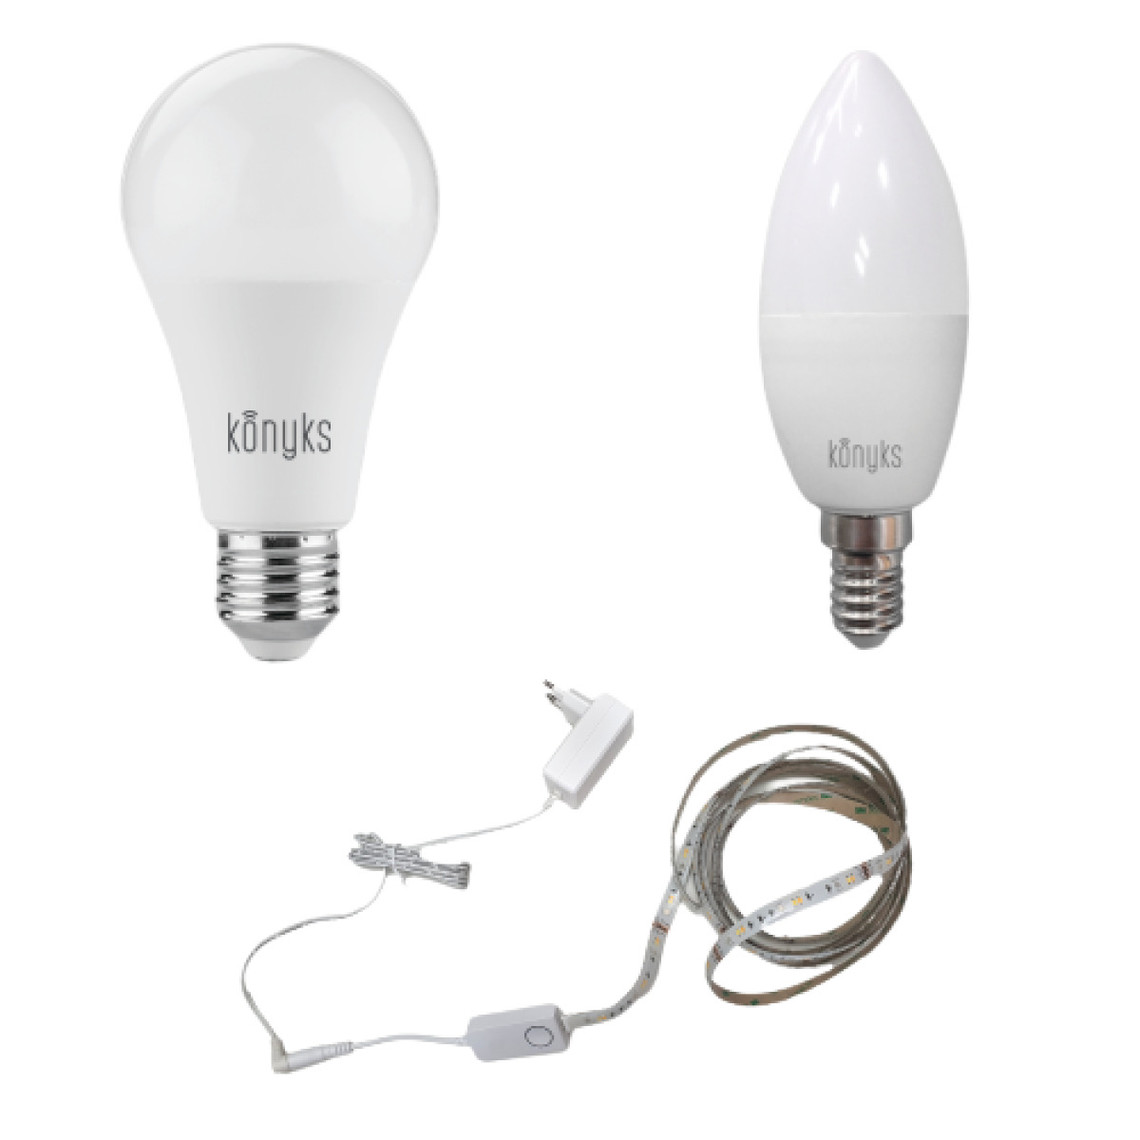 Lampe connectée Konyks Starter Kit Eclairage - Une Antalya Easy - Ampoule LED WiFi , une Antalya E14 MAX Easy - Ampoule connectée et un DALLAS - Ruban LED Connecté